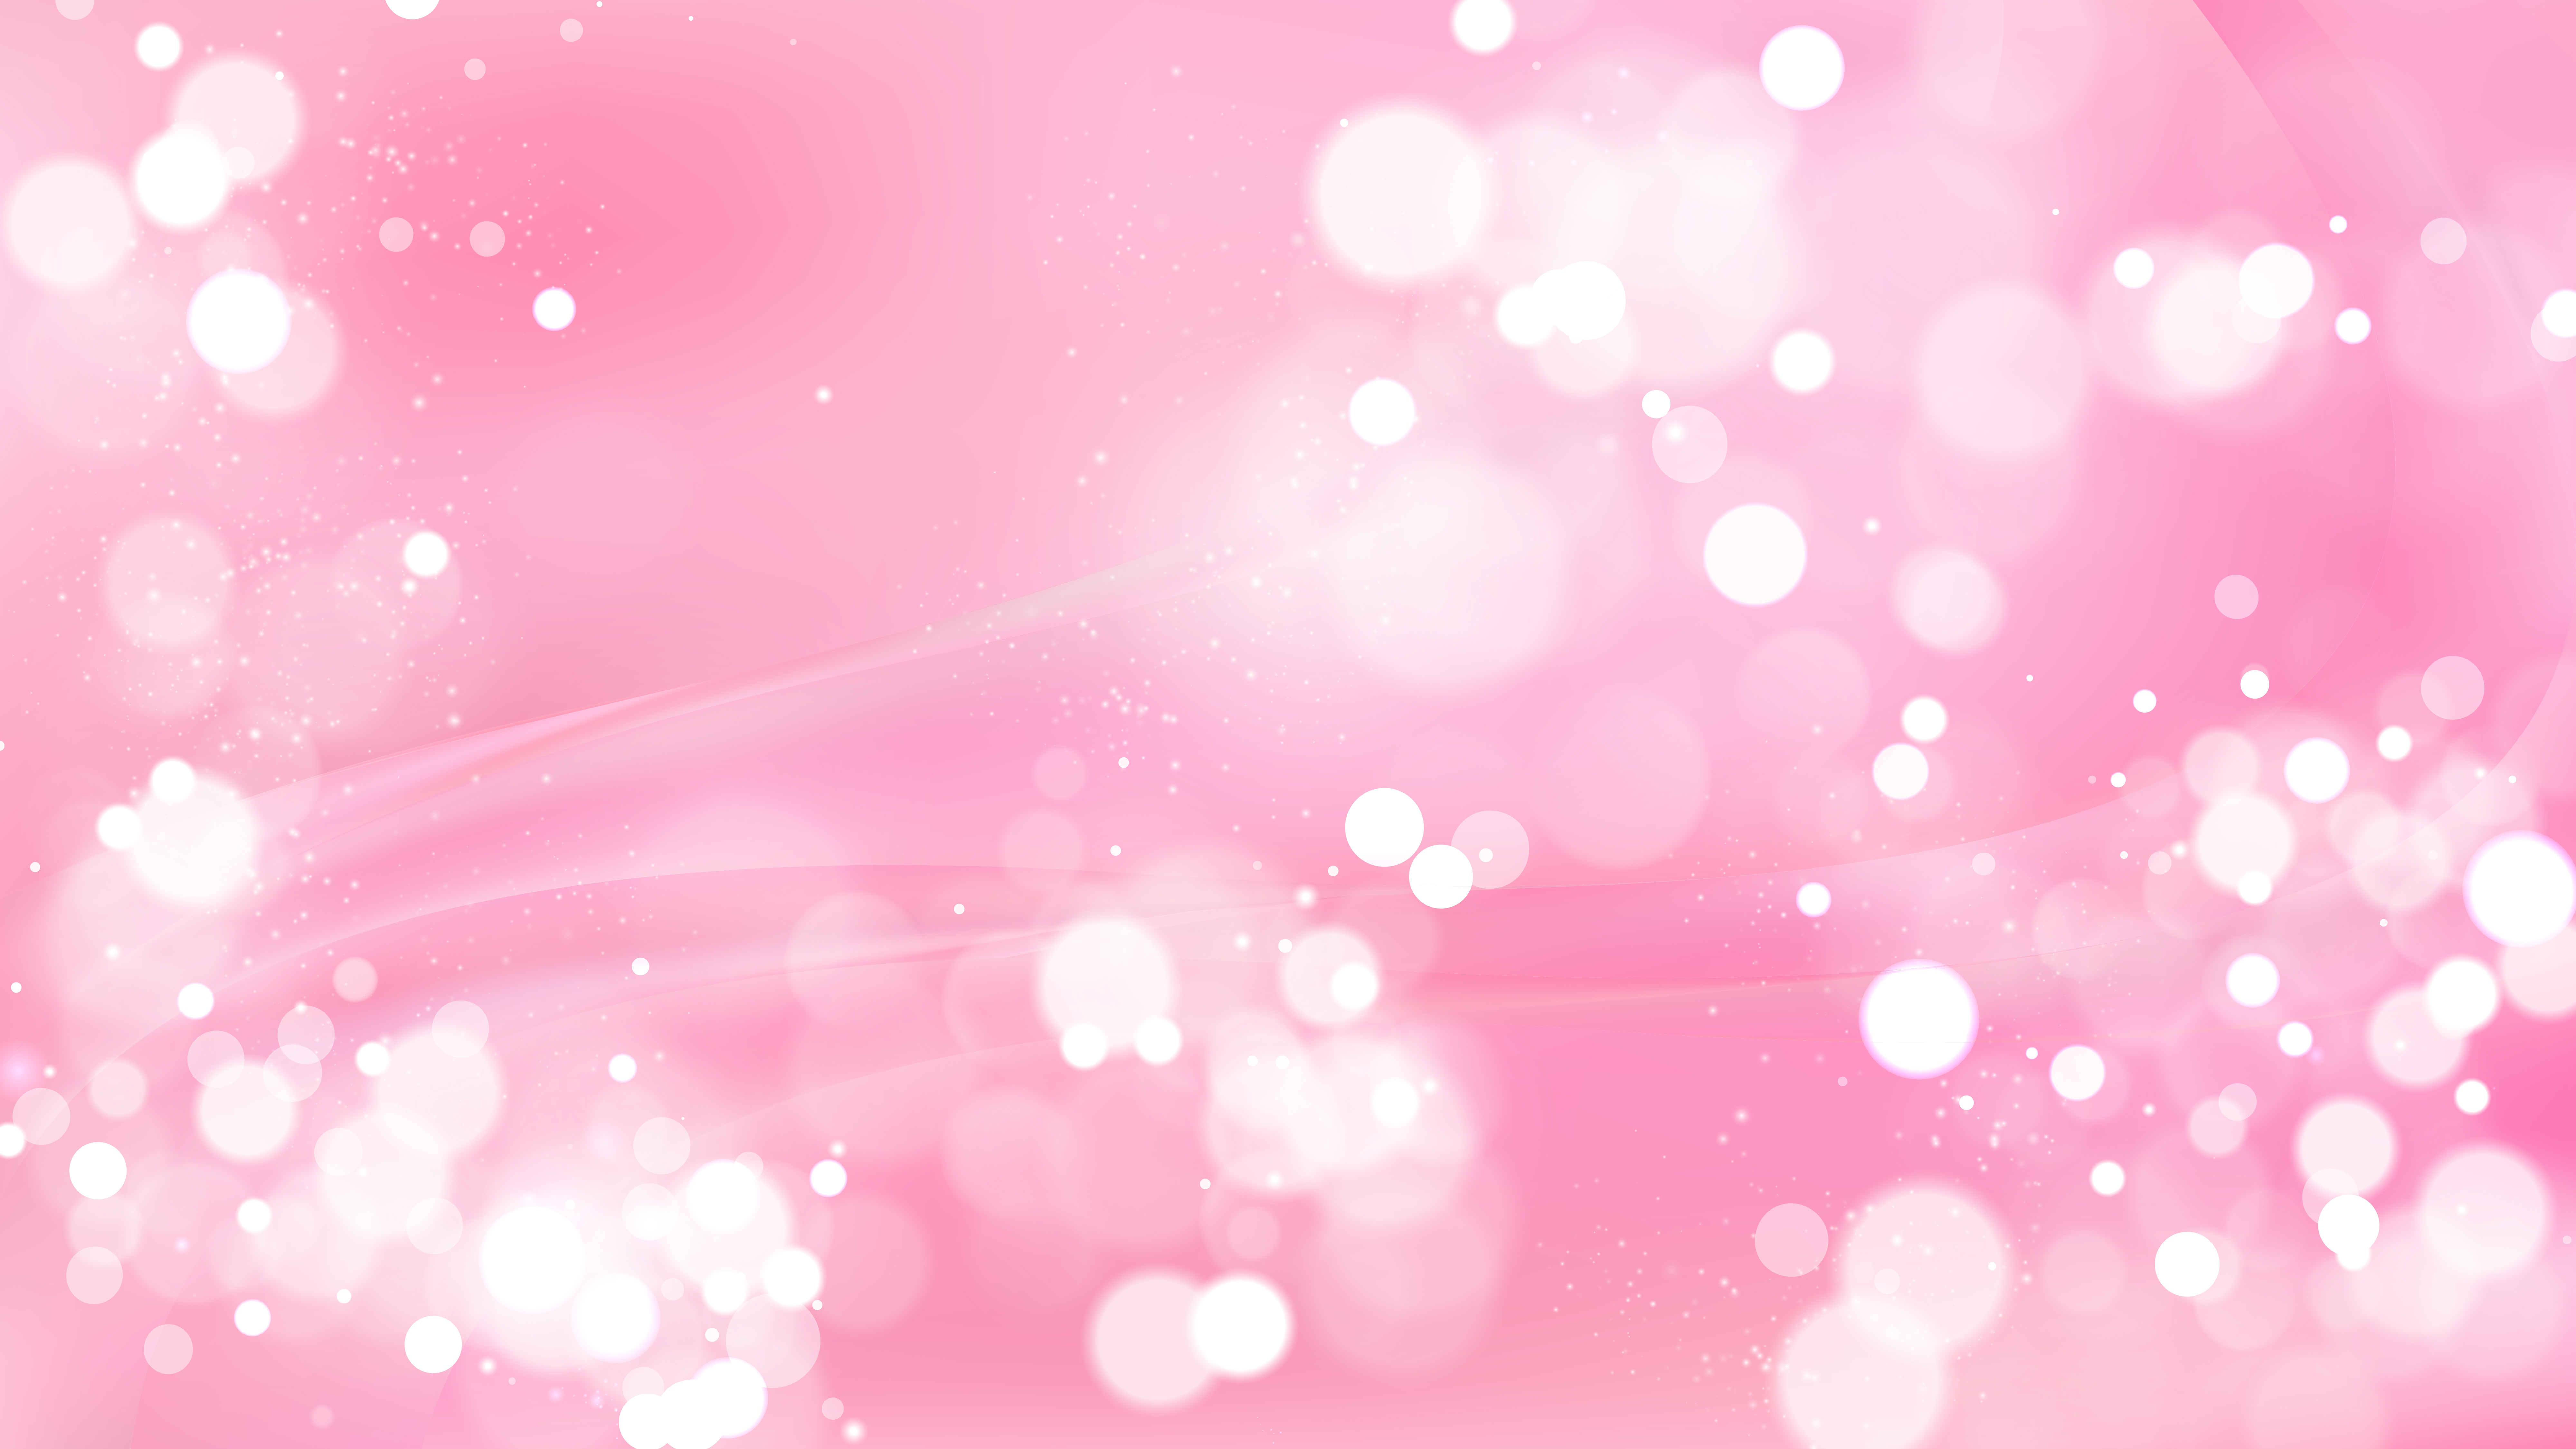 Free Abstract Pastel Pink Defocused Background Image